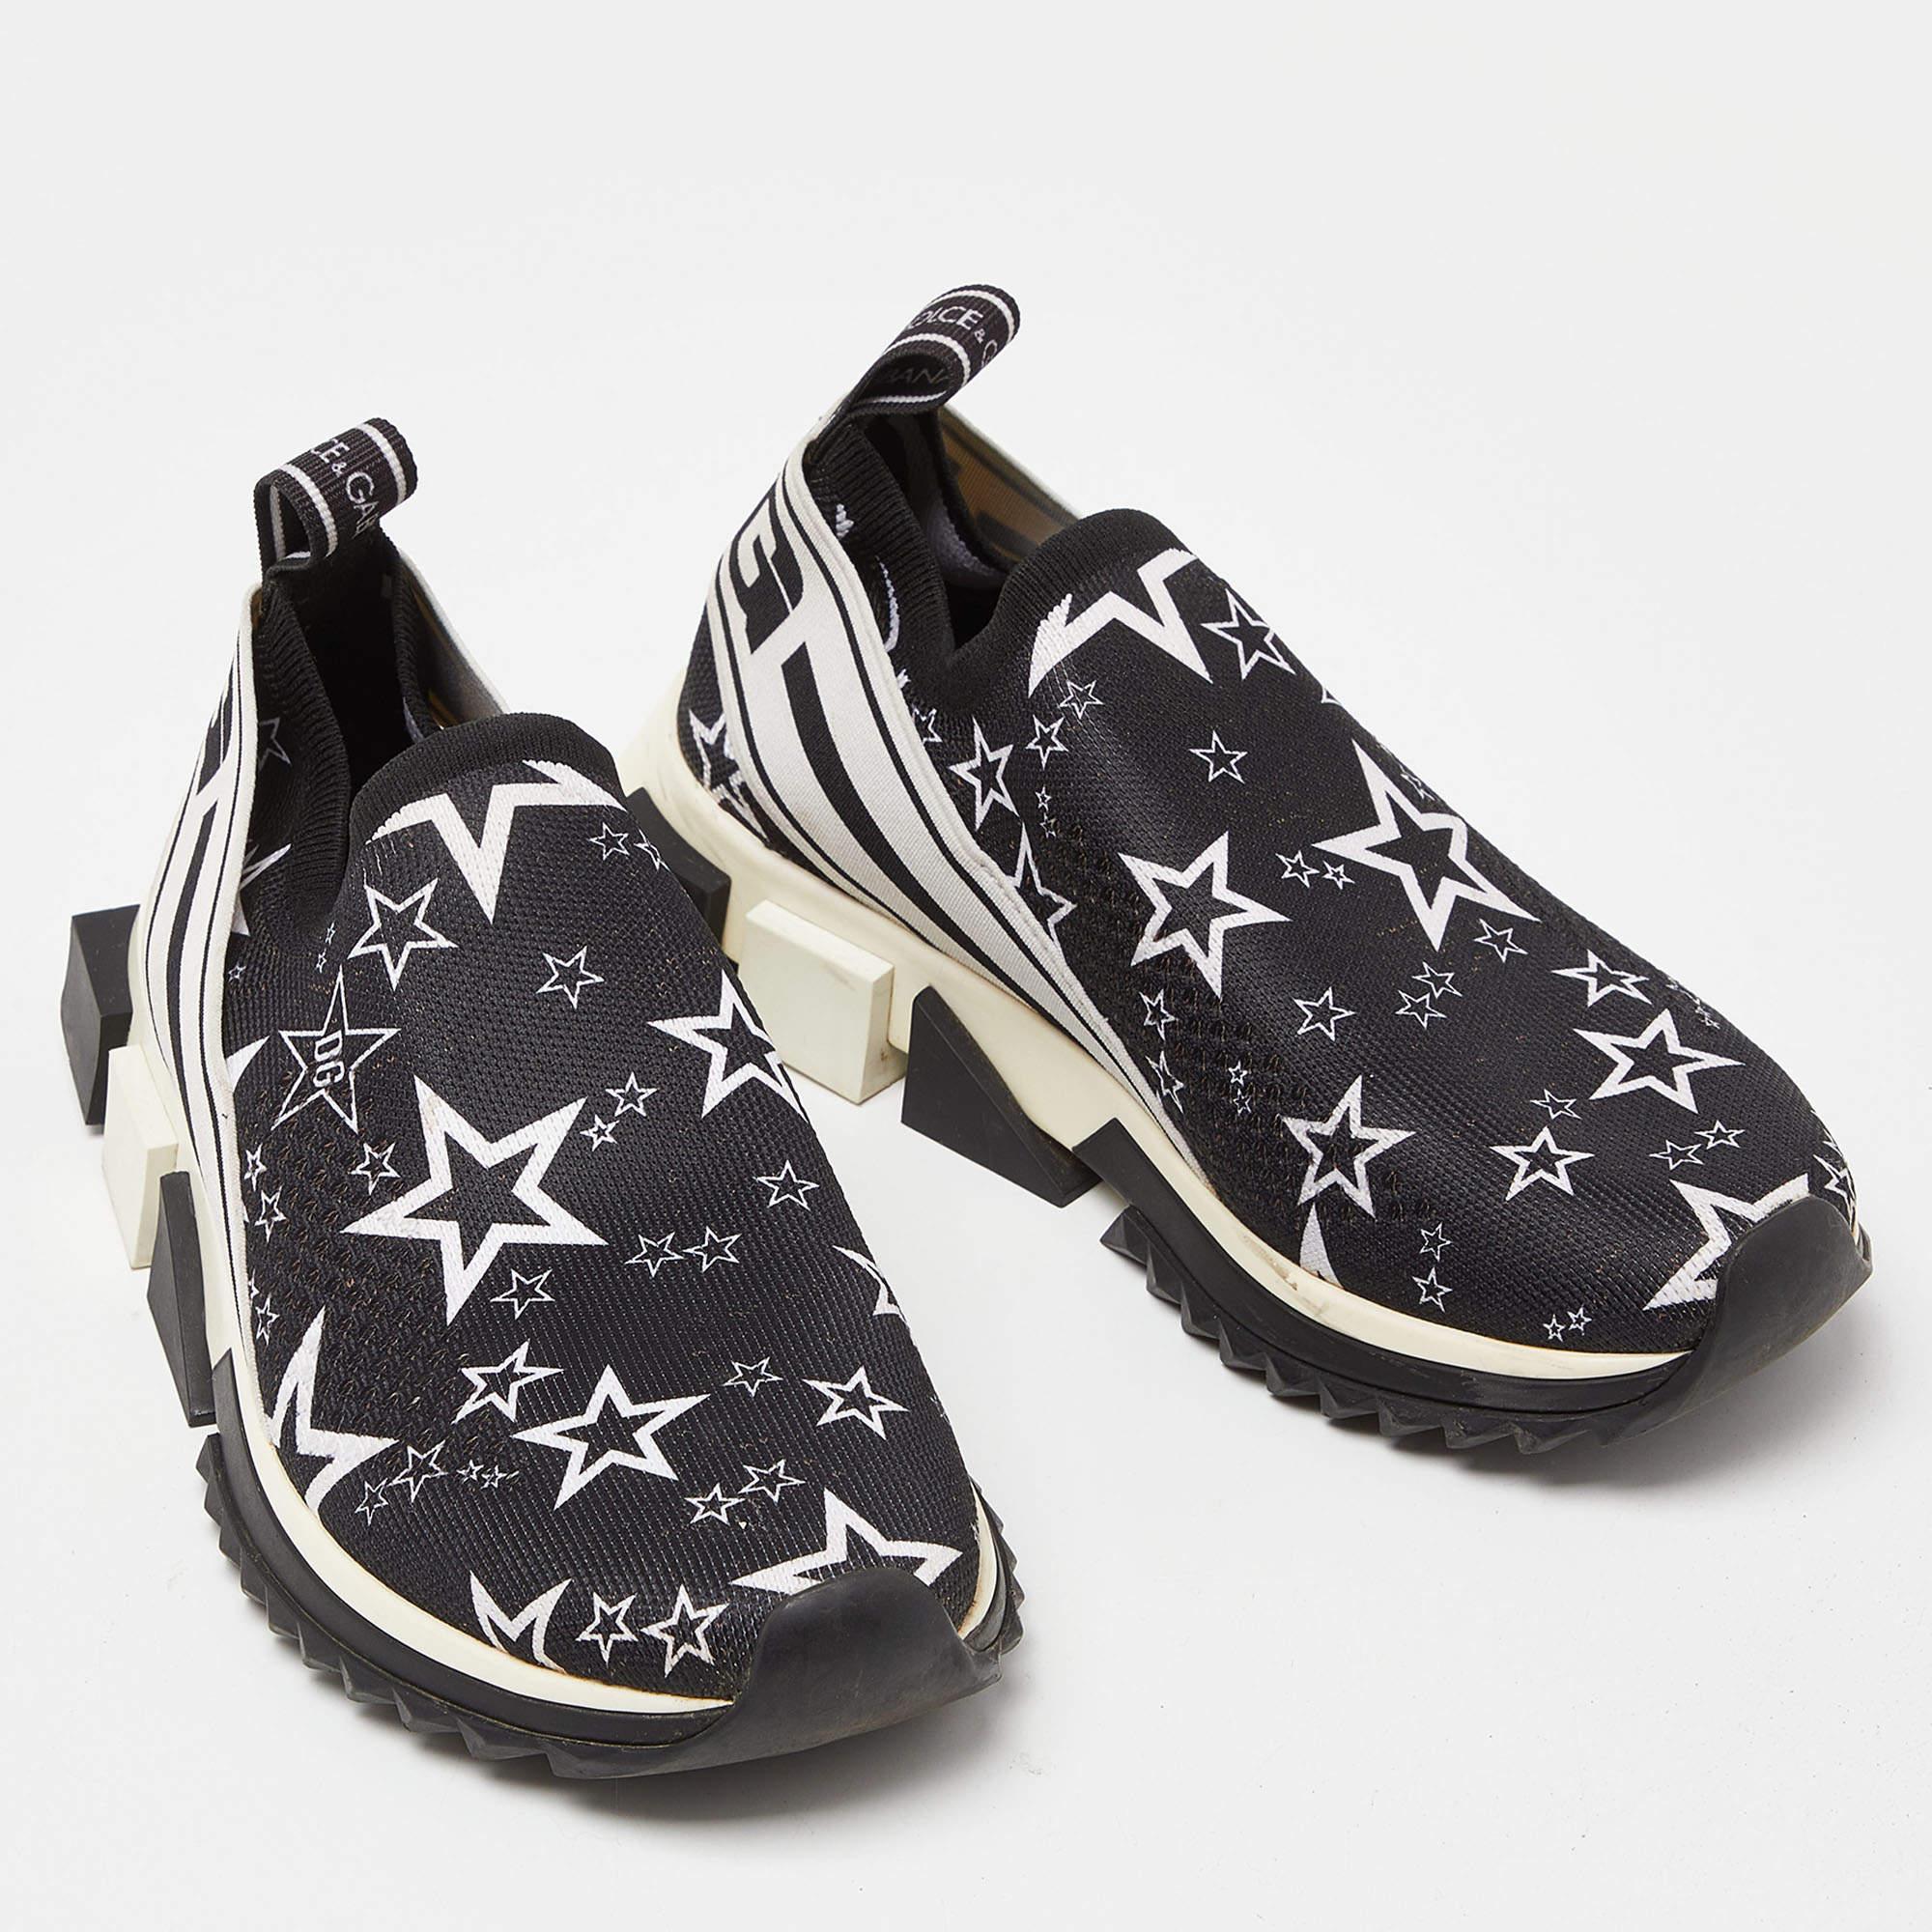 Dolce & Gabbana Black/White Stars Knit Fabric Sorrento Slip-On Sneakers Size 36 For Sale 2